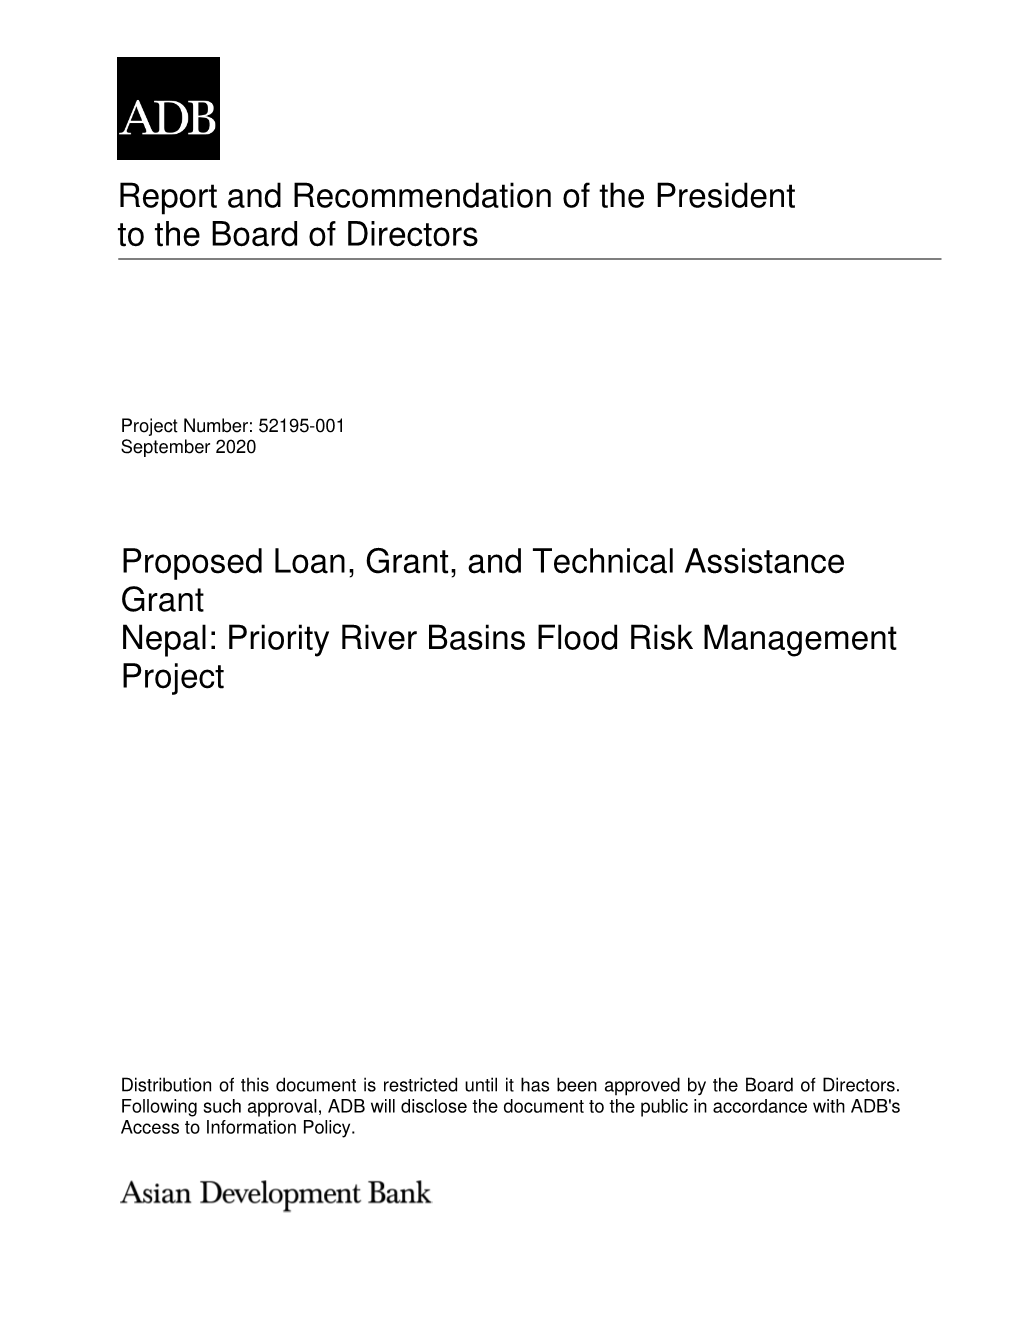 Priority River Basins Flood Risk Management Project